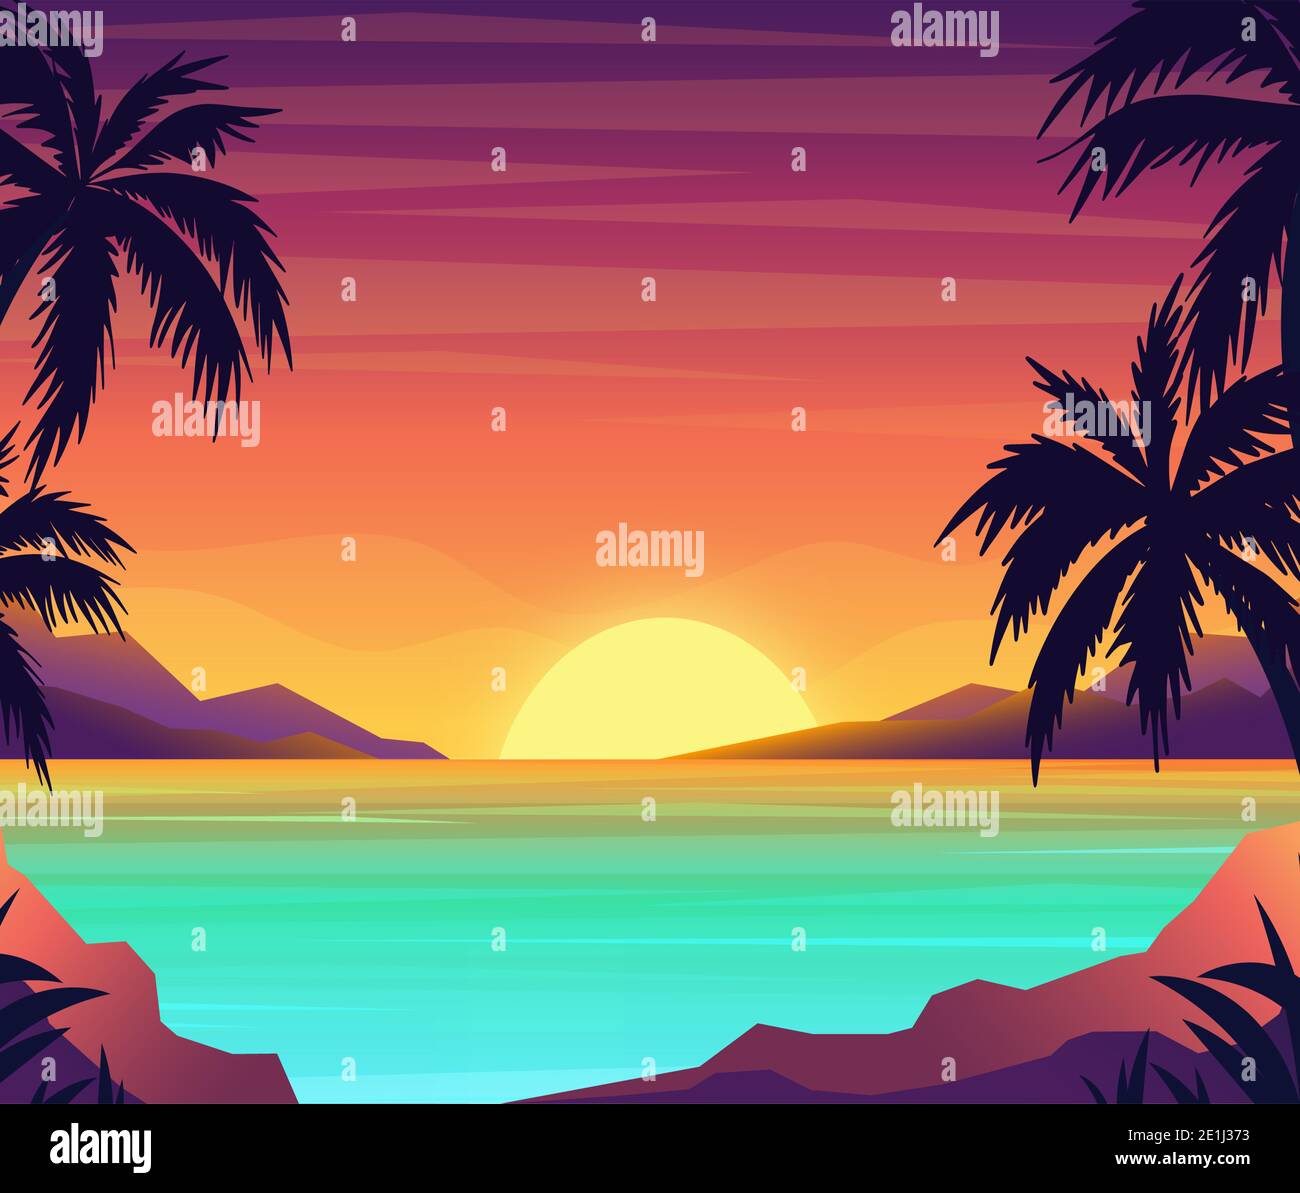 Beach sunset wallpaper, clipart Stock Photo - Alamy